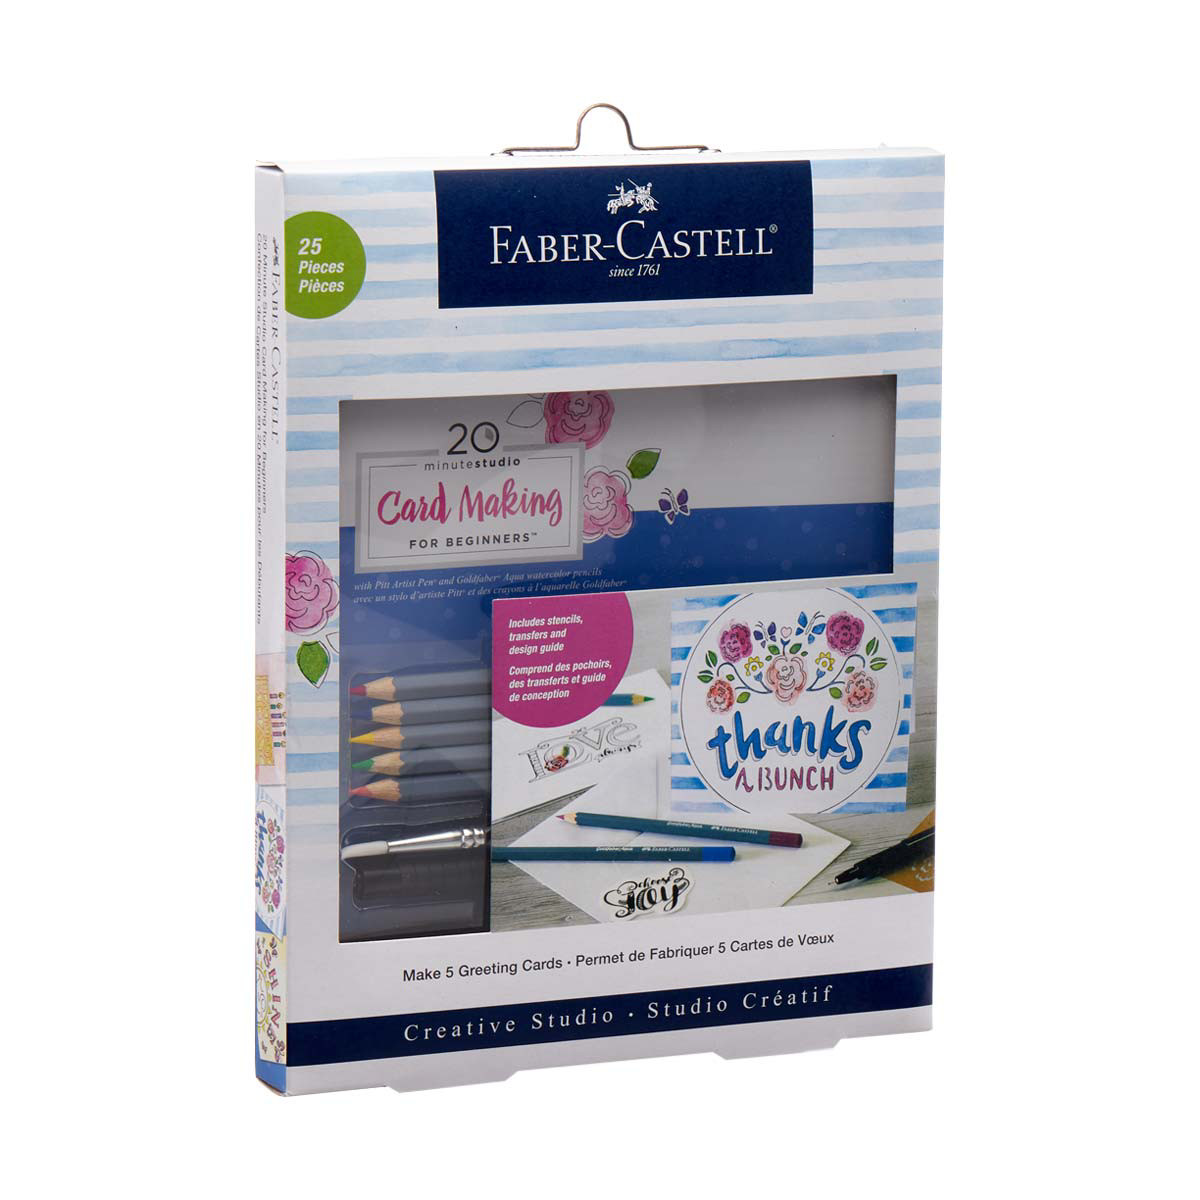 Faber-Castell 20-Minute Studio Card Making for Beginners Kit